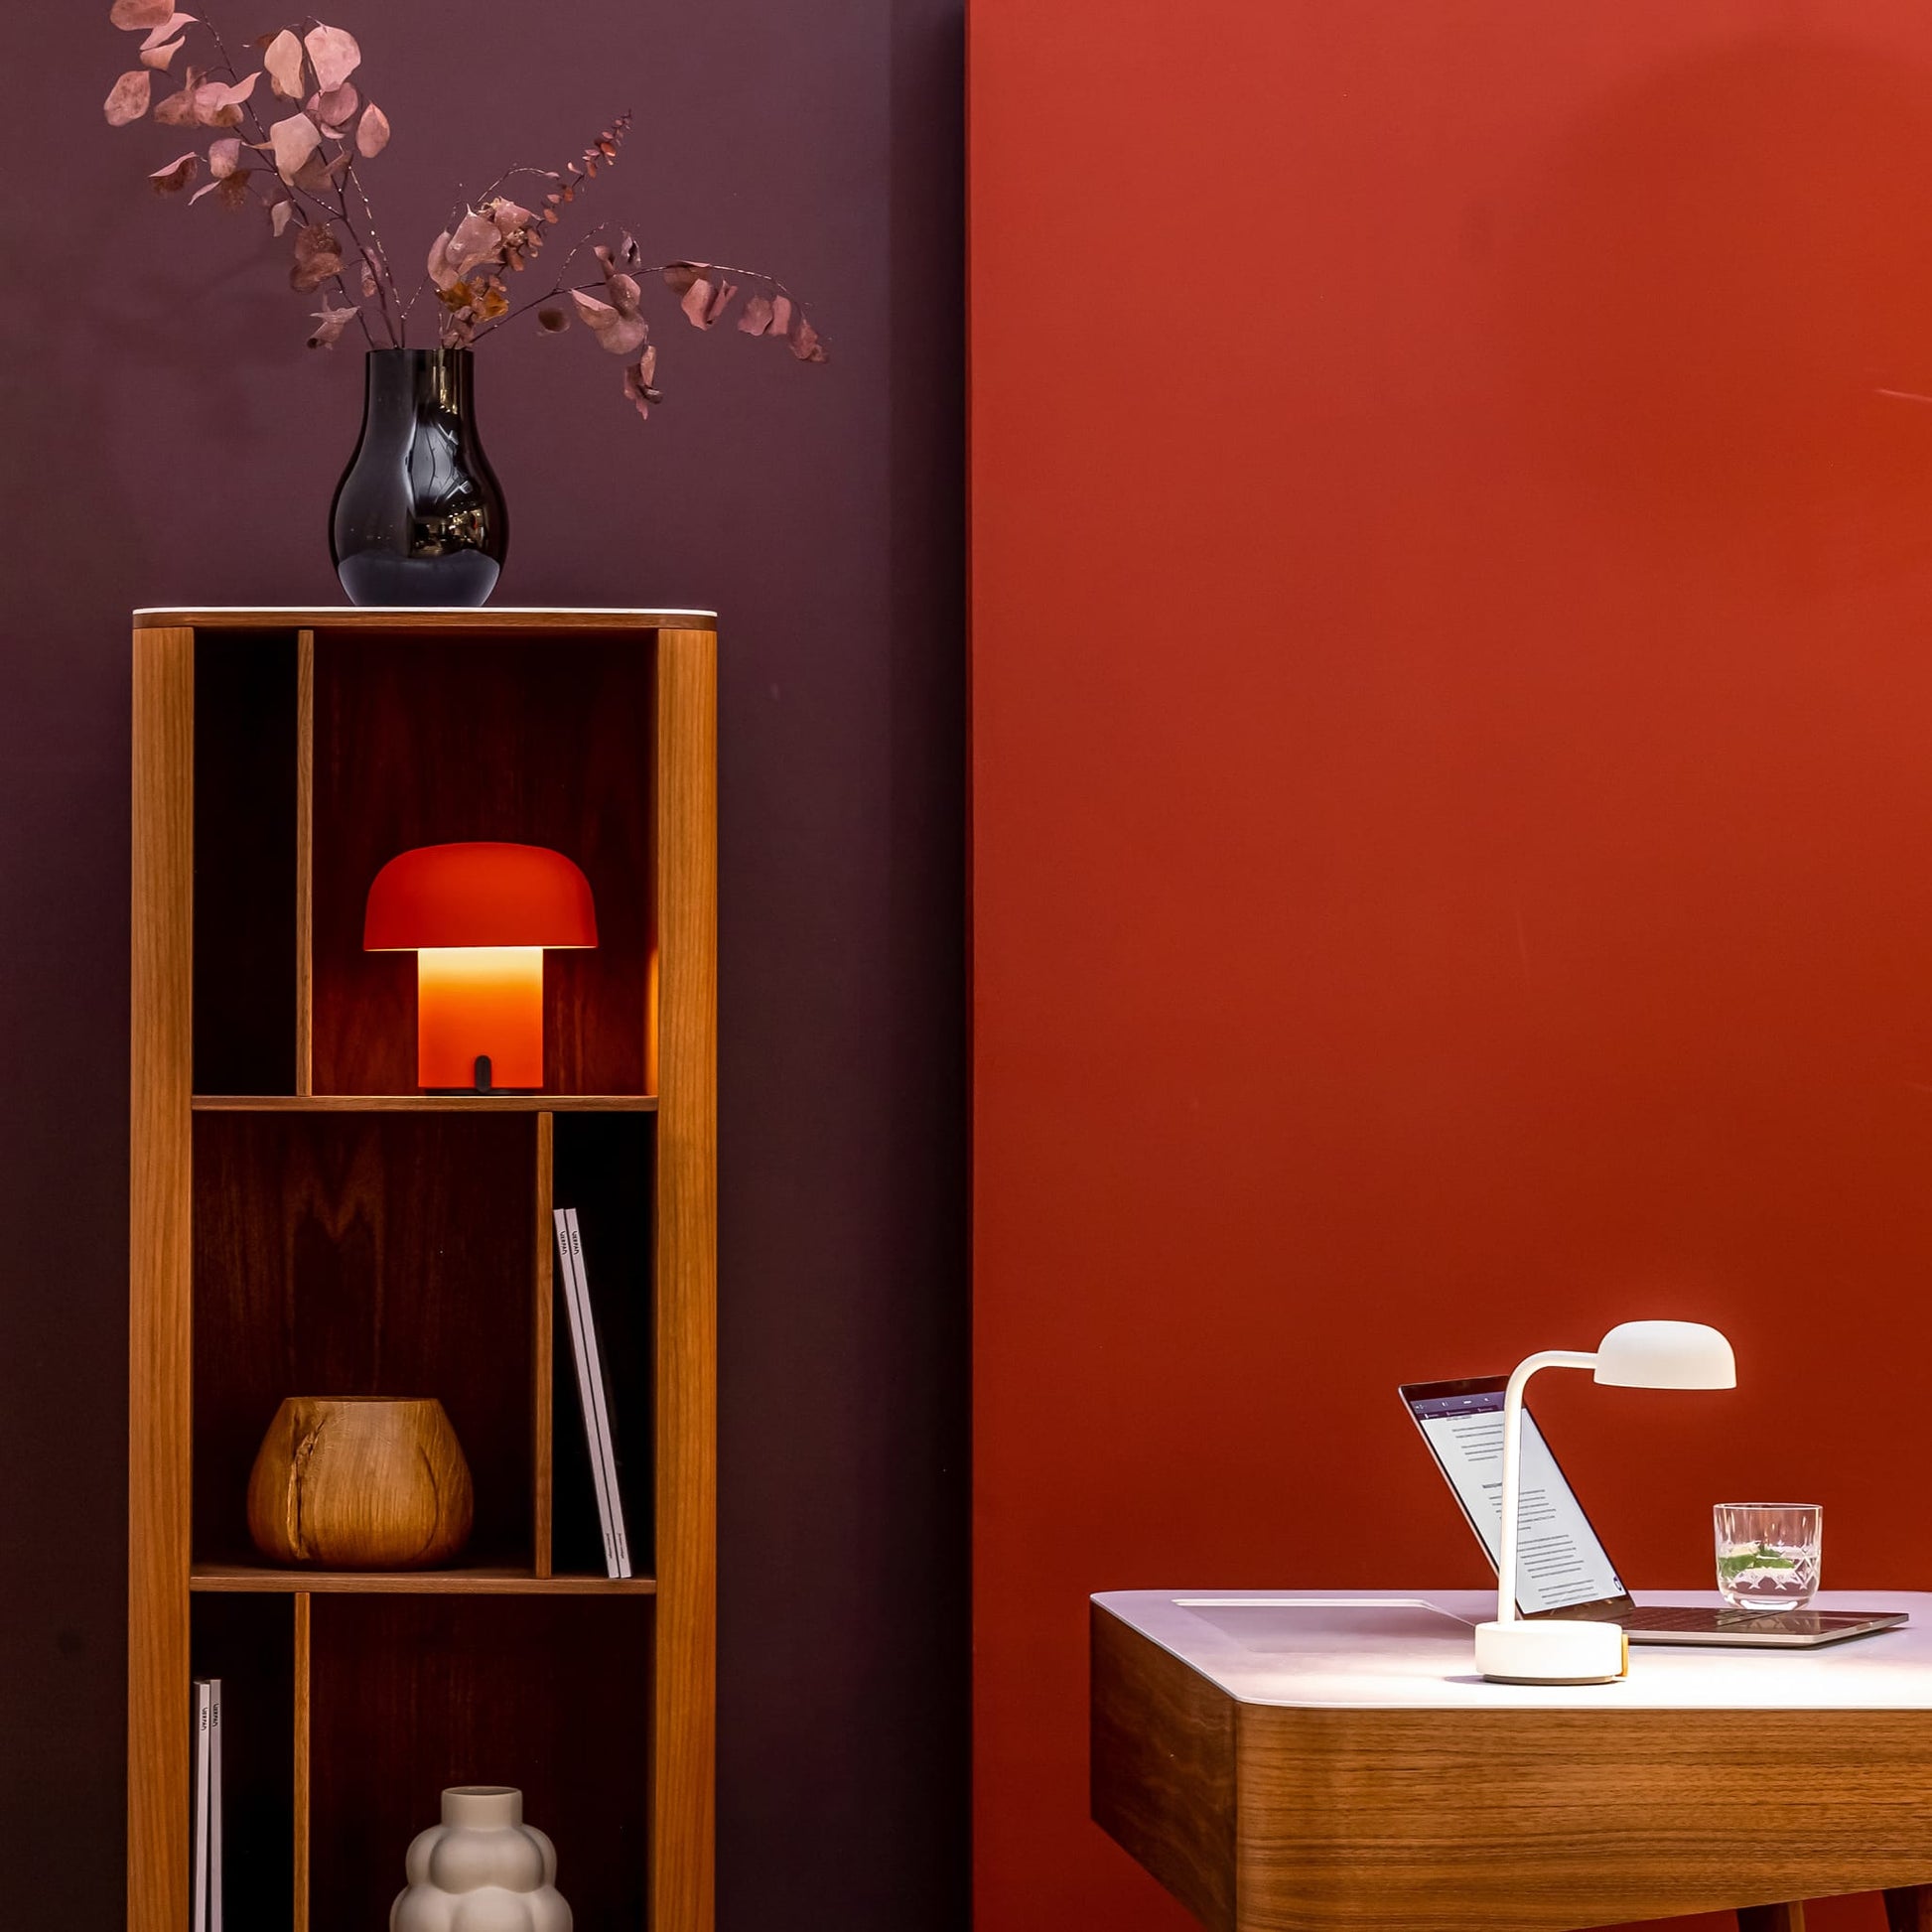 Kooduu's Sensa Orange, a sophisticated, dimmable LED lamp for Canadian decor.